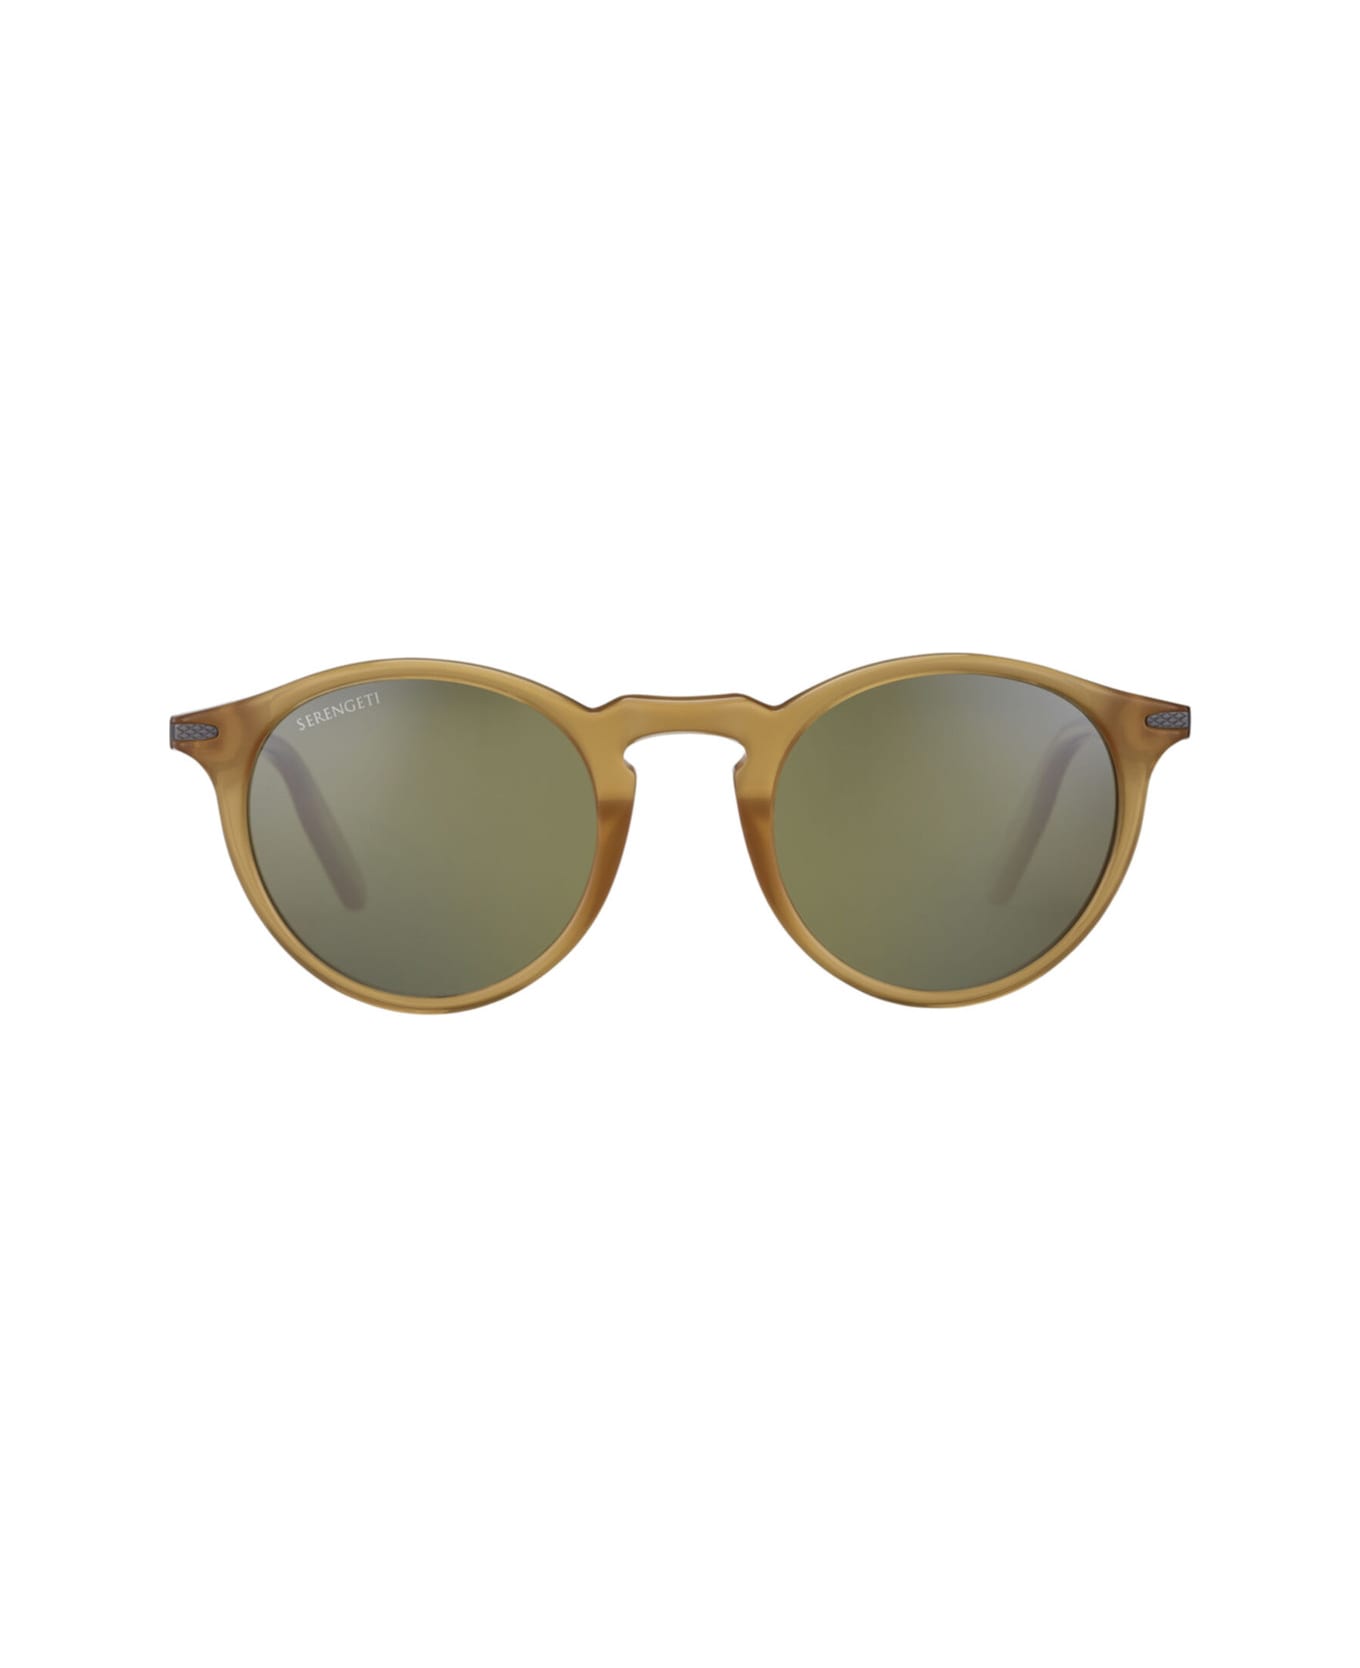 Serengeti Eyewear Raffaele 8951 Sunglasses - Honey